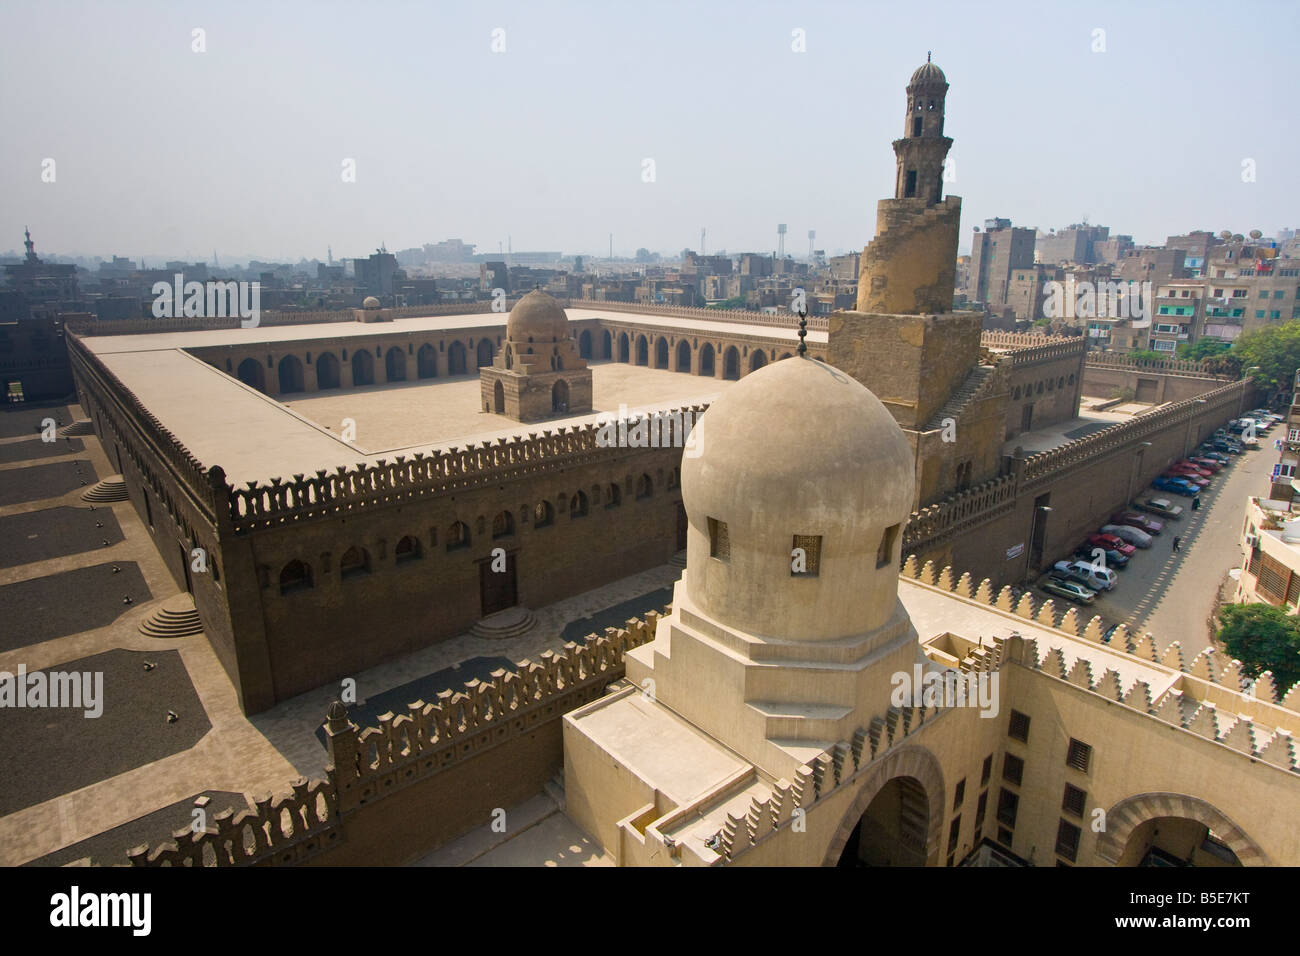 Ibn-Tulun-Moschee in Cairo Egpyt Stockfoto